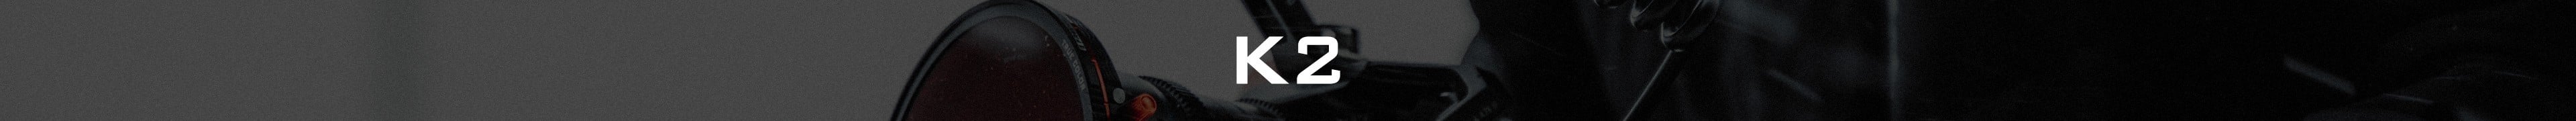 K2 자기 필터: VND1-6, VND6-9, CPL, 그라데이션 - 미래 보장